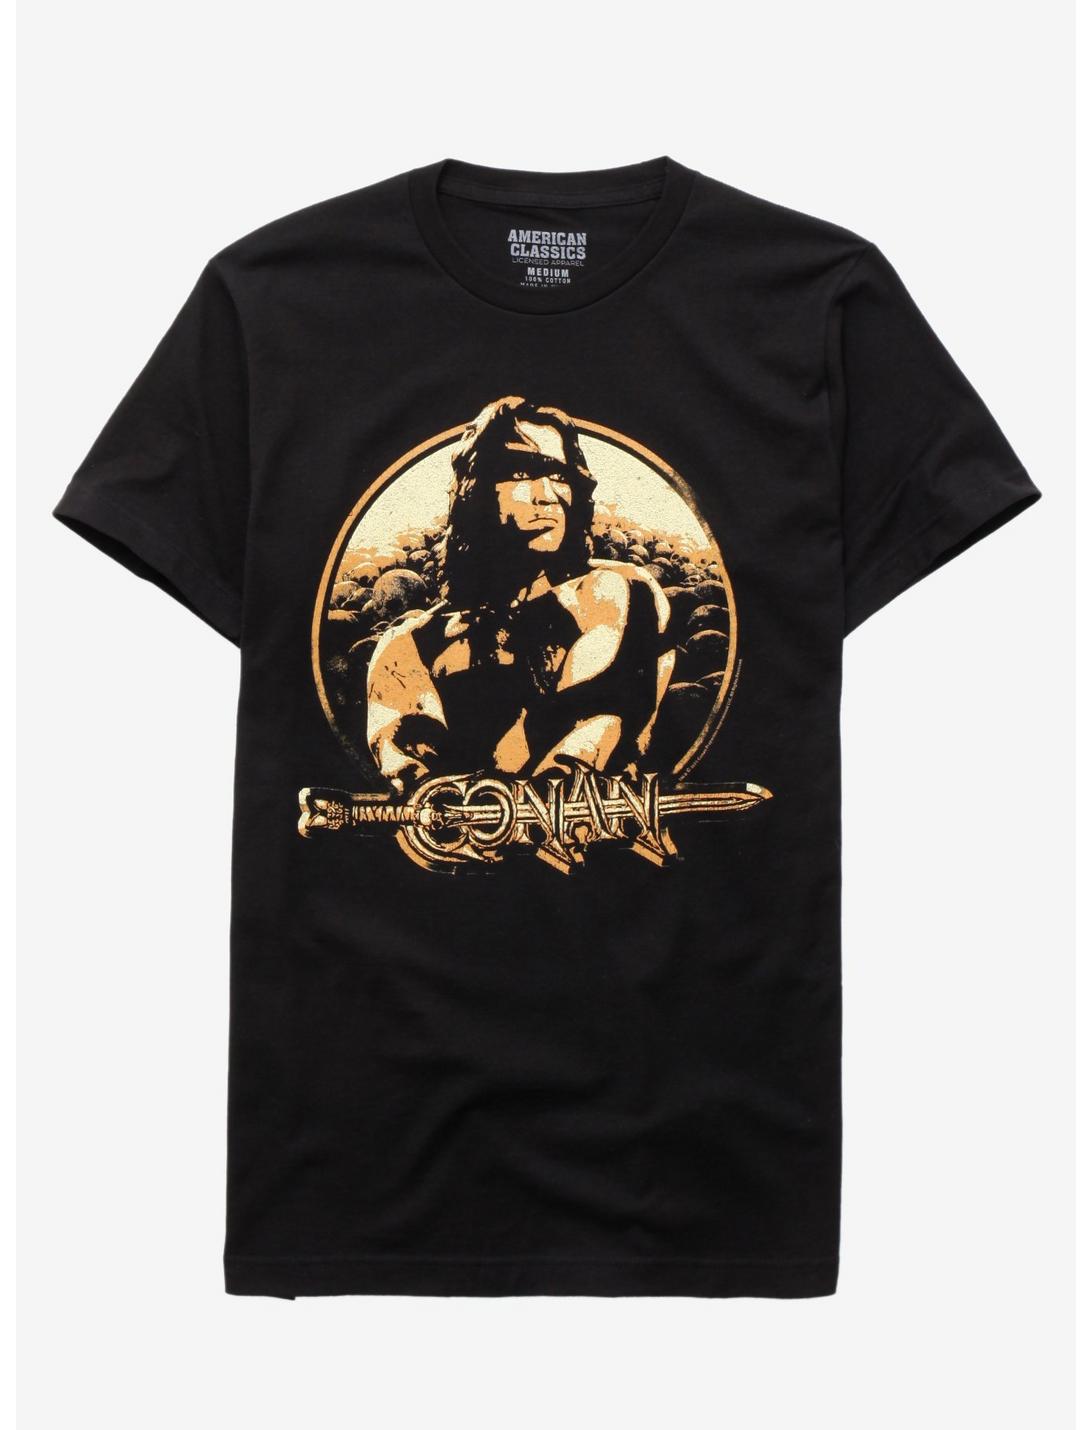 Conan The Barbarian T-Shirt, BLACK, hi-res